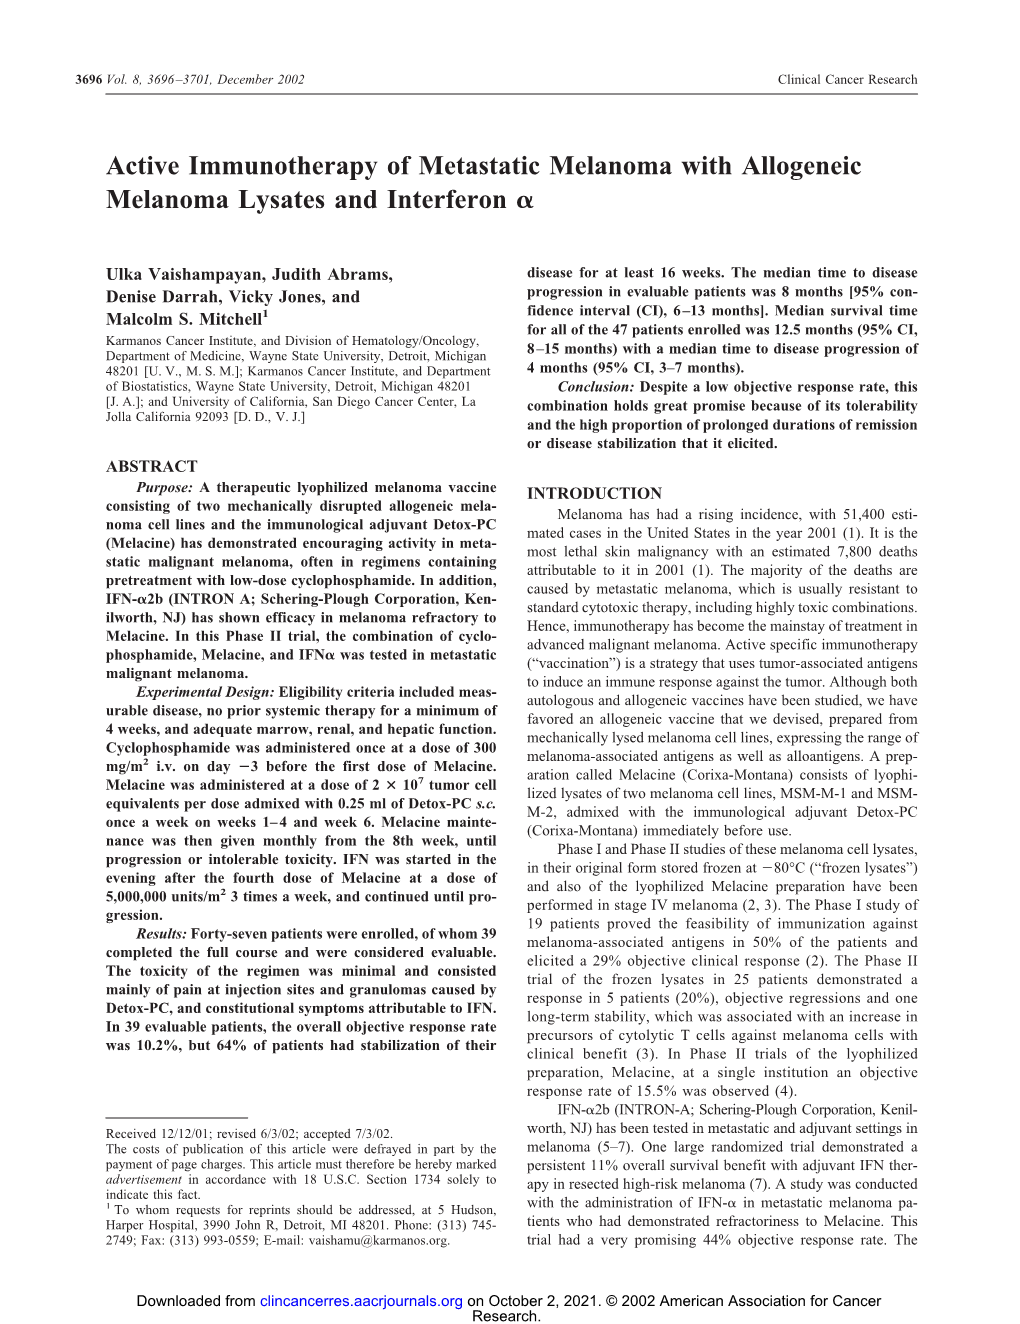 Active Immunotherapy of Metastatic Melanoma with Allogeneic Melanoma Lysates and Interferon ␣